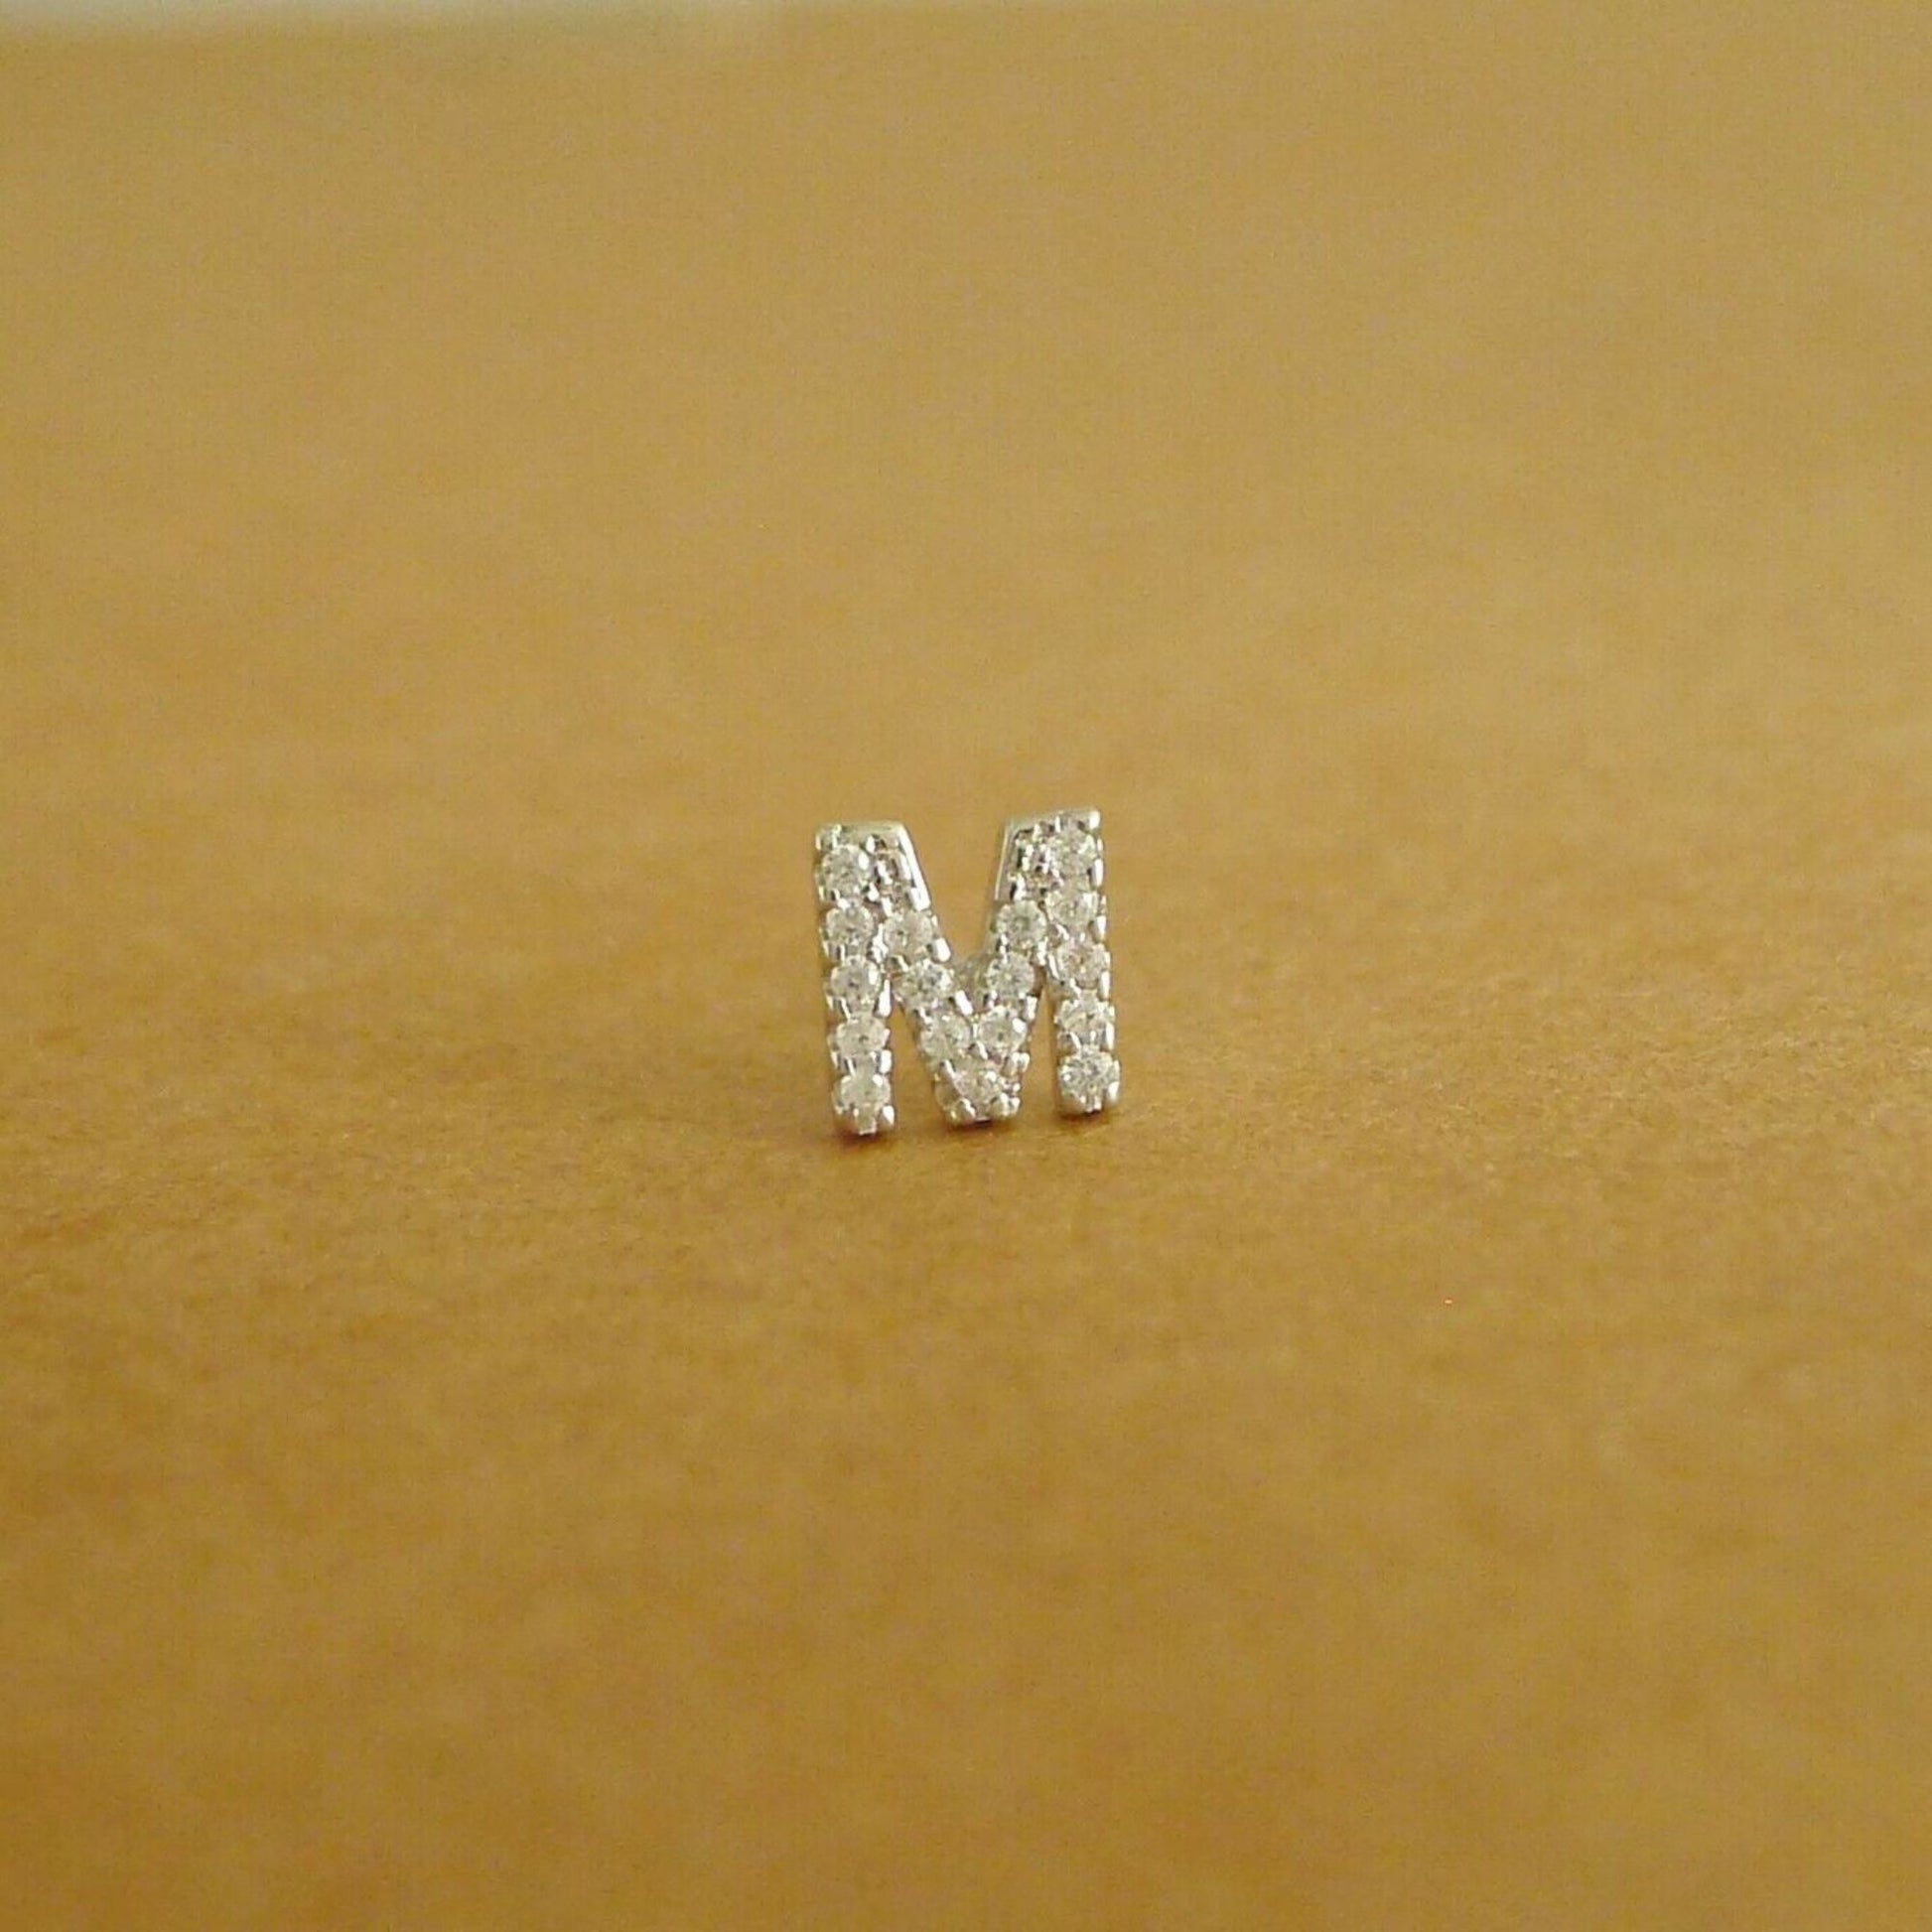 Sterling Silver CZ Alphabet Letter Stud Earrings A-Z - Paved with Cubic Zirconia - sugarkittenlondon